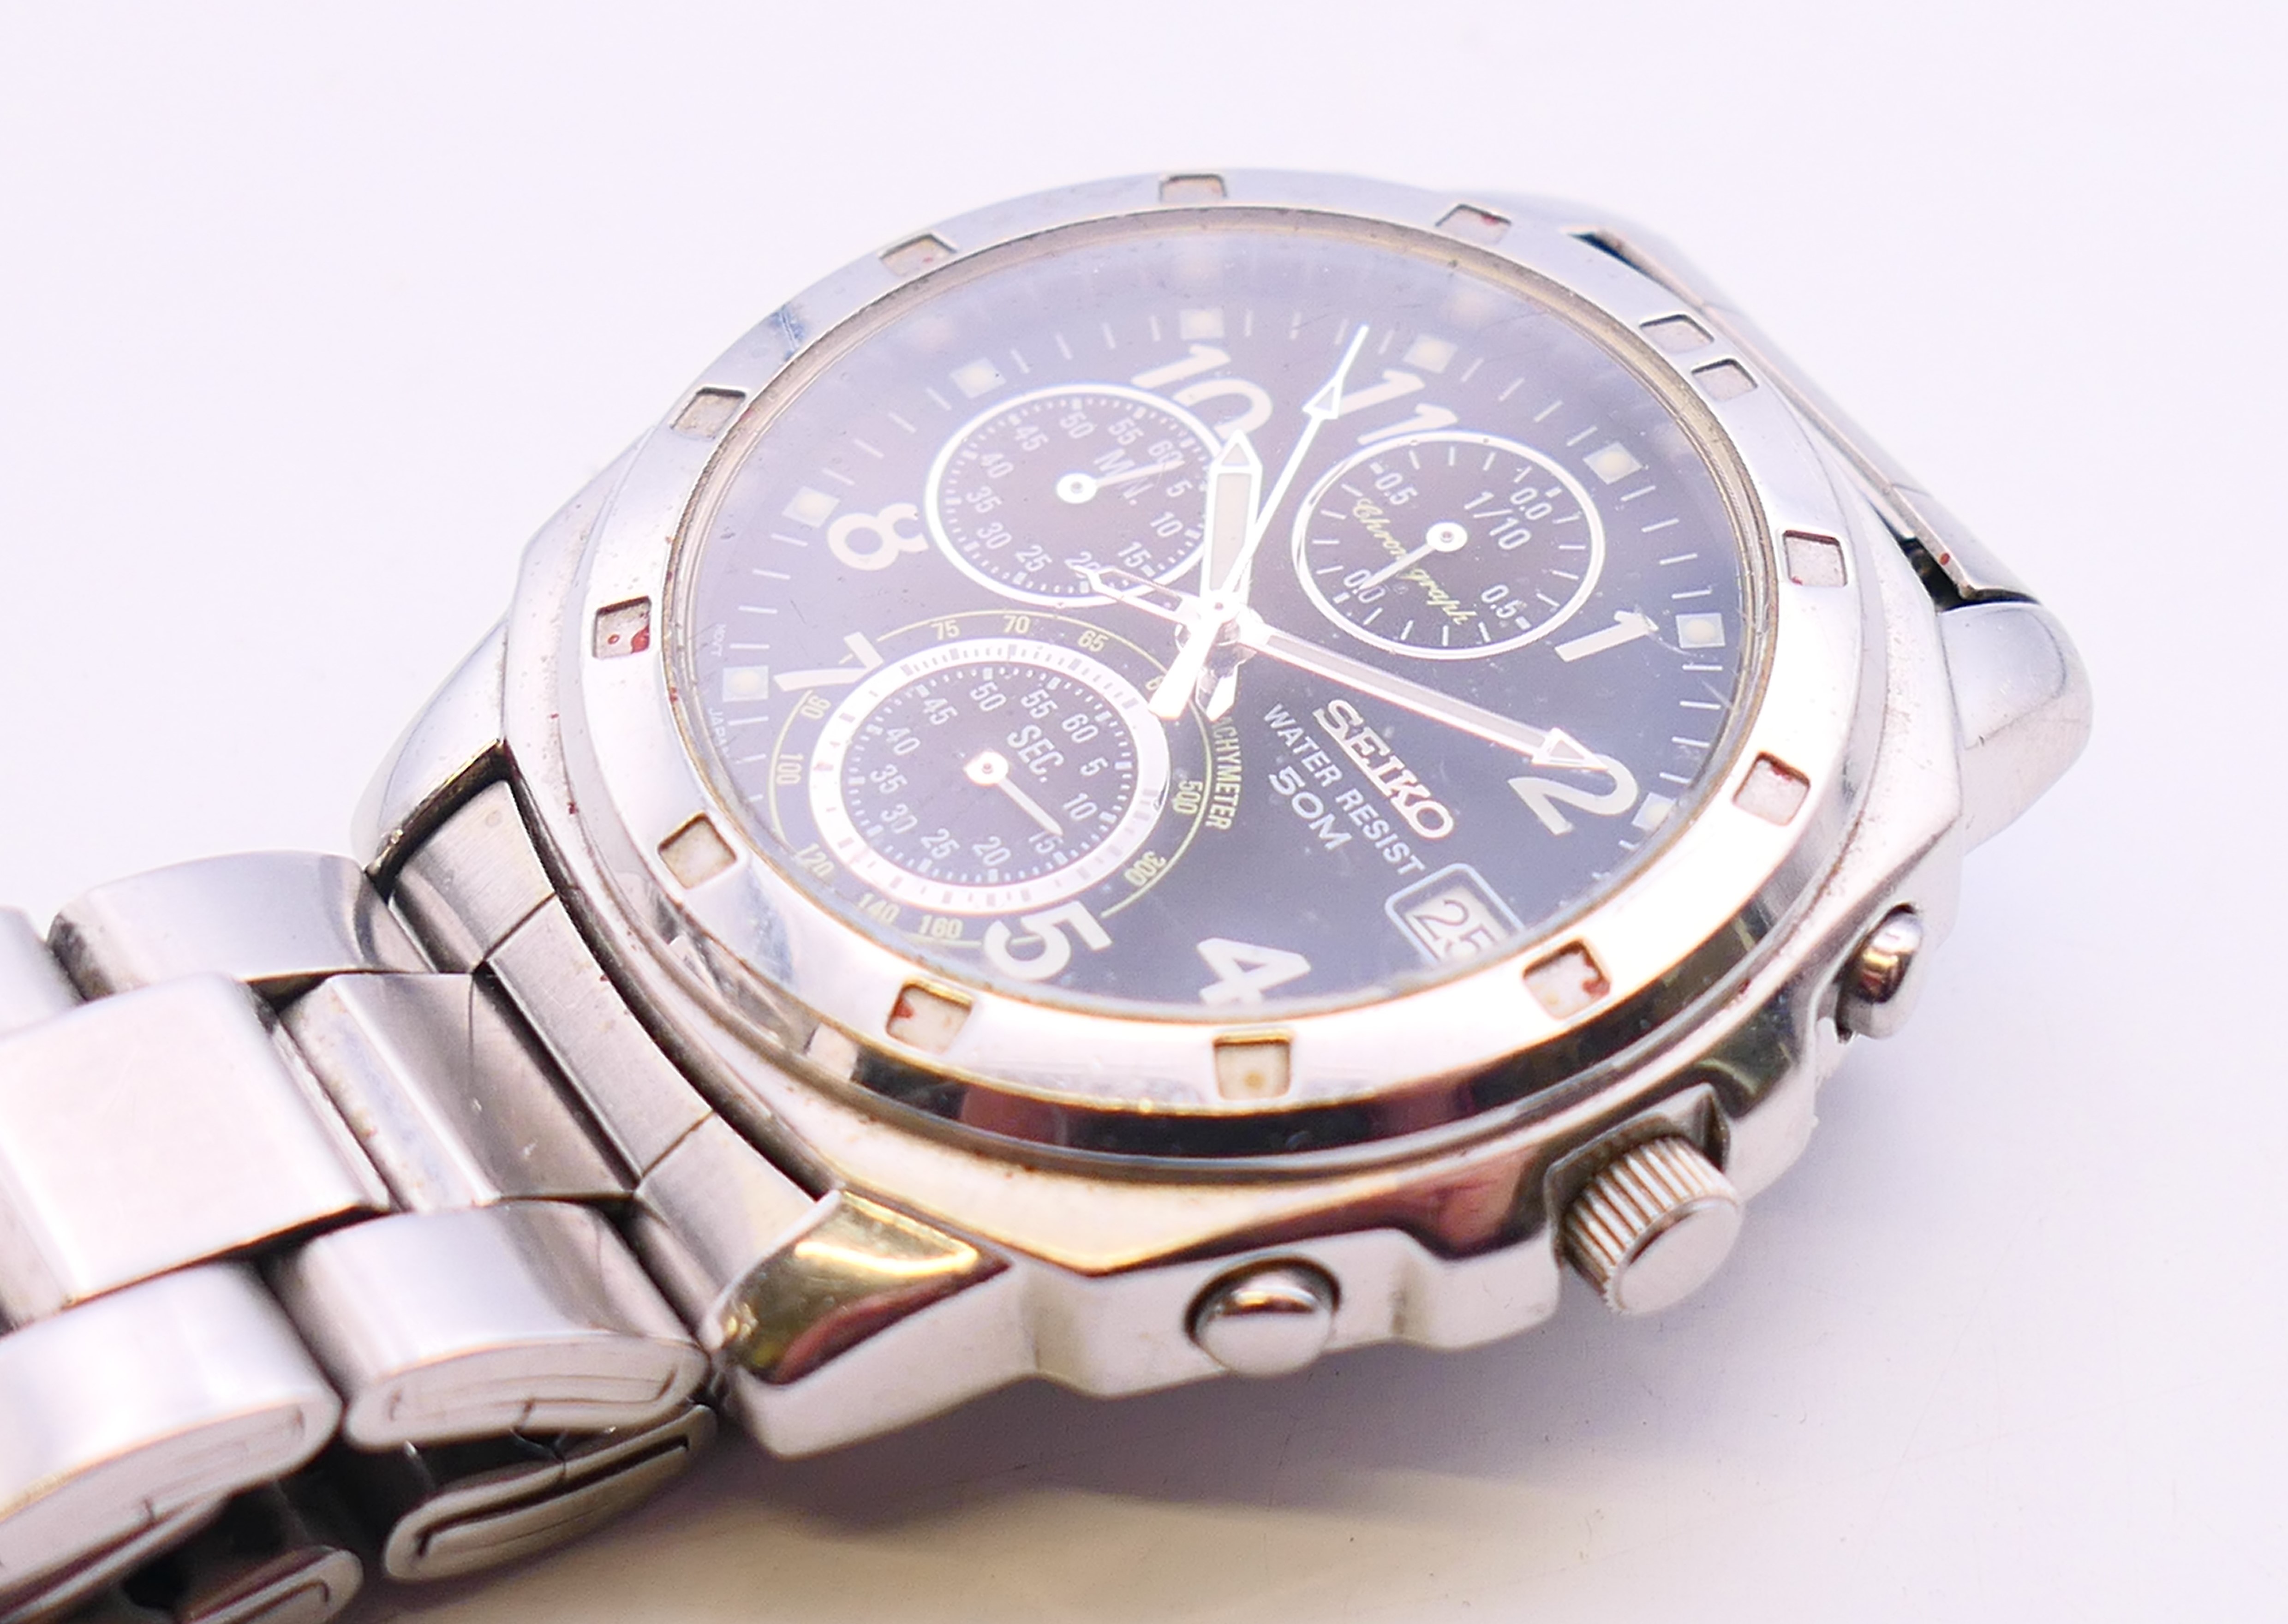 A Seiko gentleman's wristwatch. 4 cm diameter. - Image 2 of 8